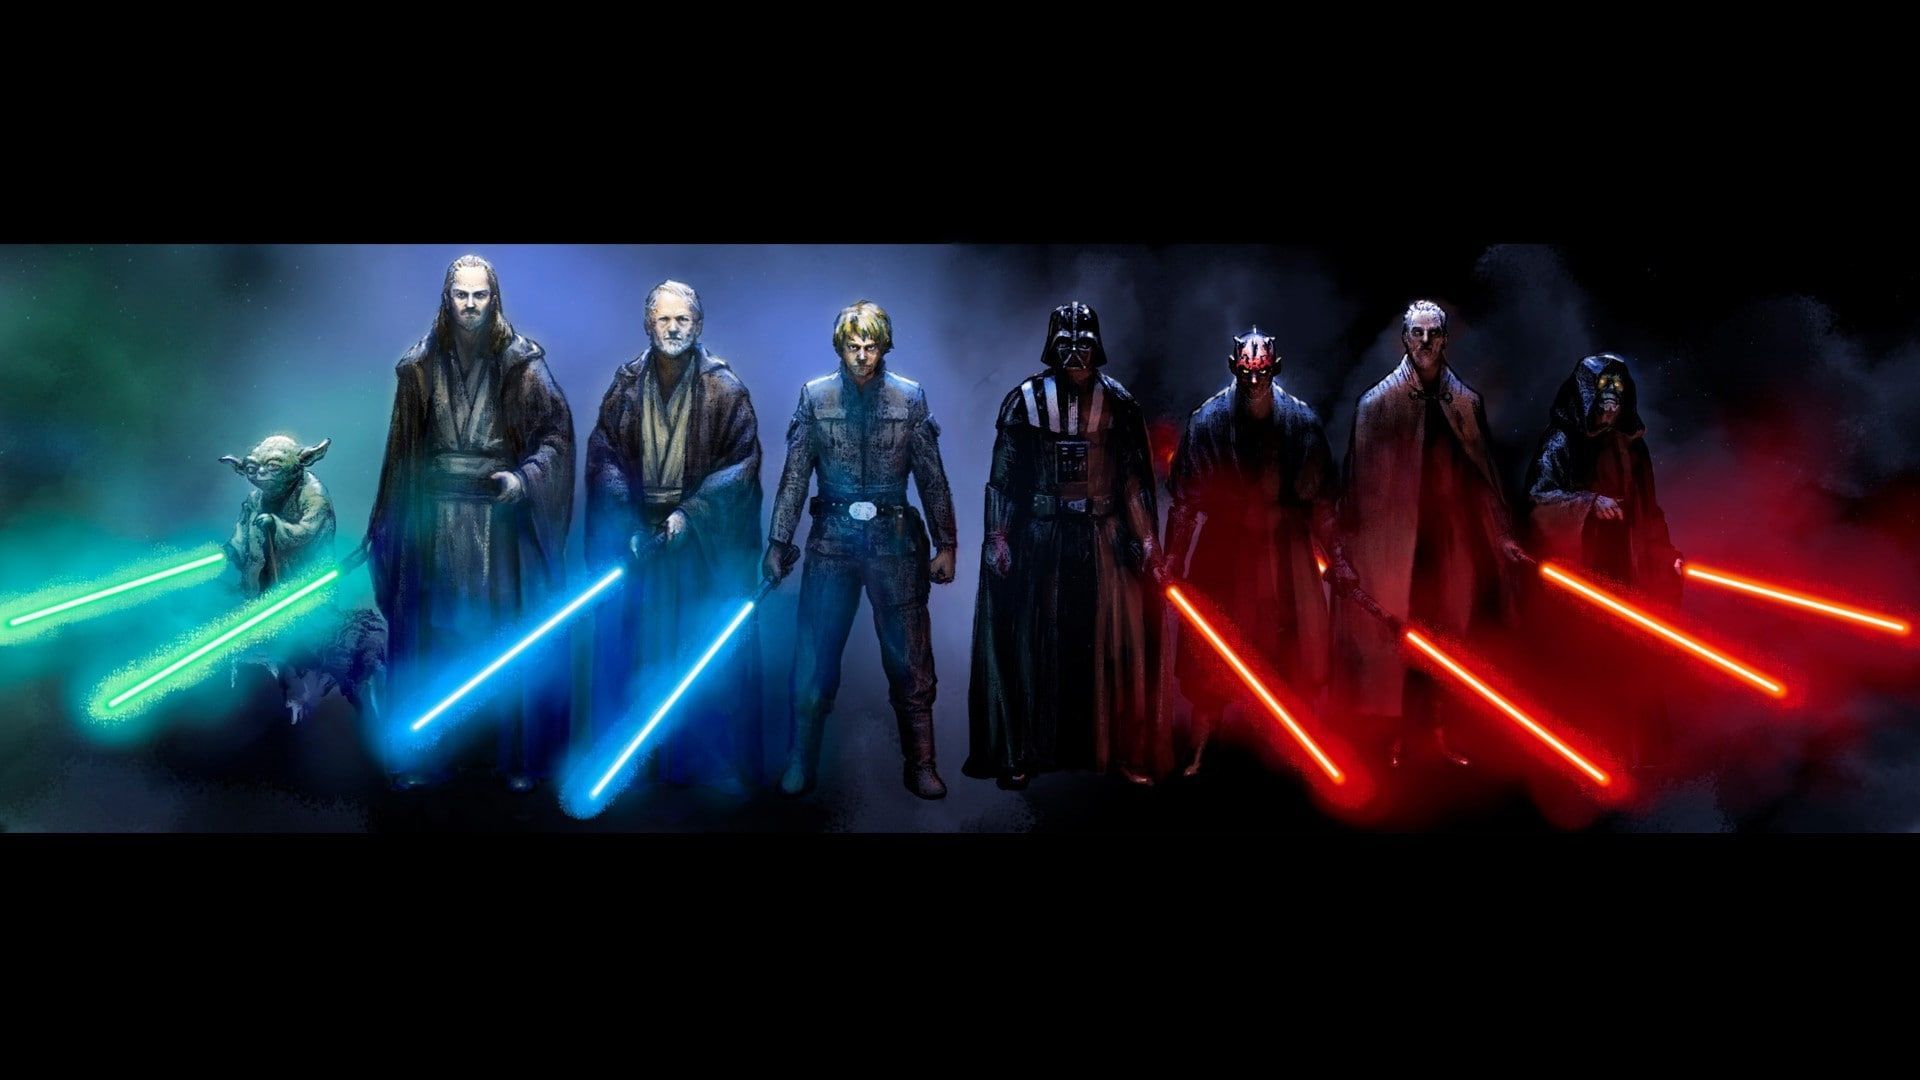 Darth Maul darth vader Luke Skywalker Obi Wan Kenobi Star Wars #Yoda P #wallpaper #hdwallpape. Star wars wallpaper, Darth vader wallpaper, Star wars picture